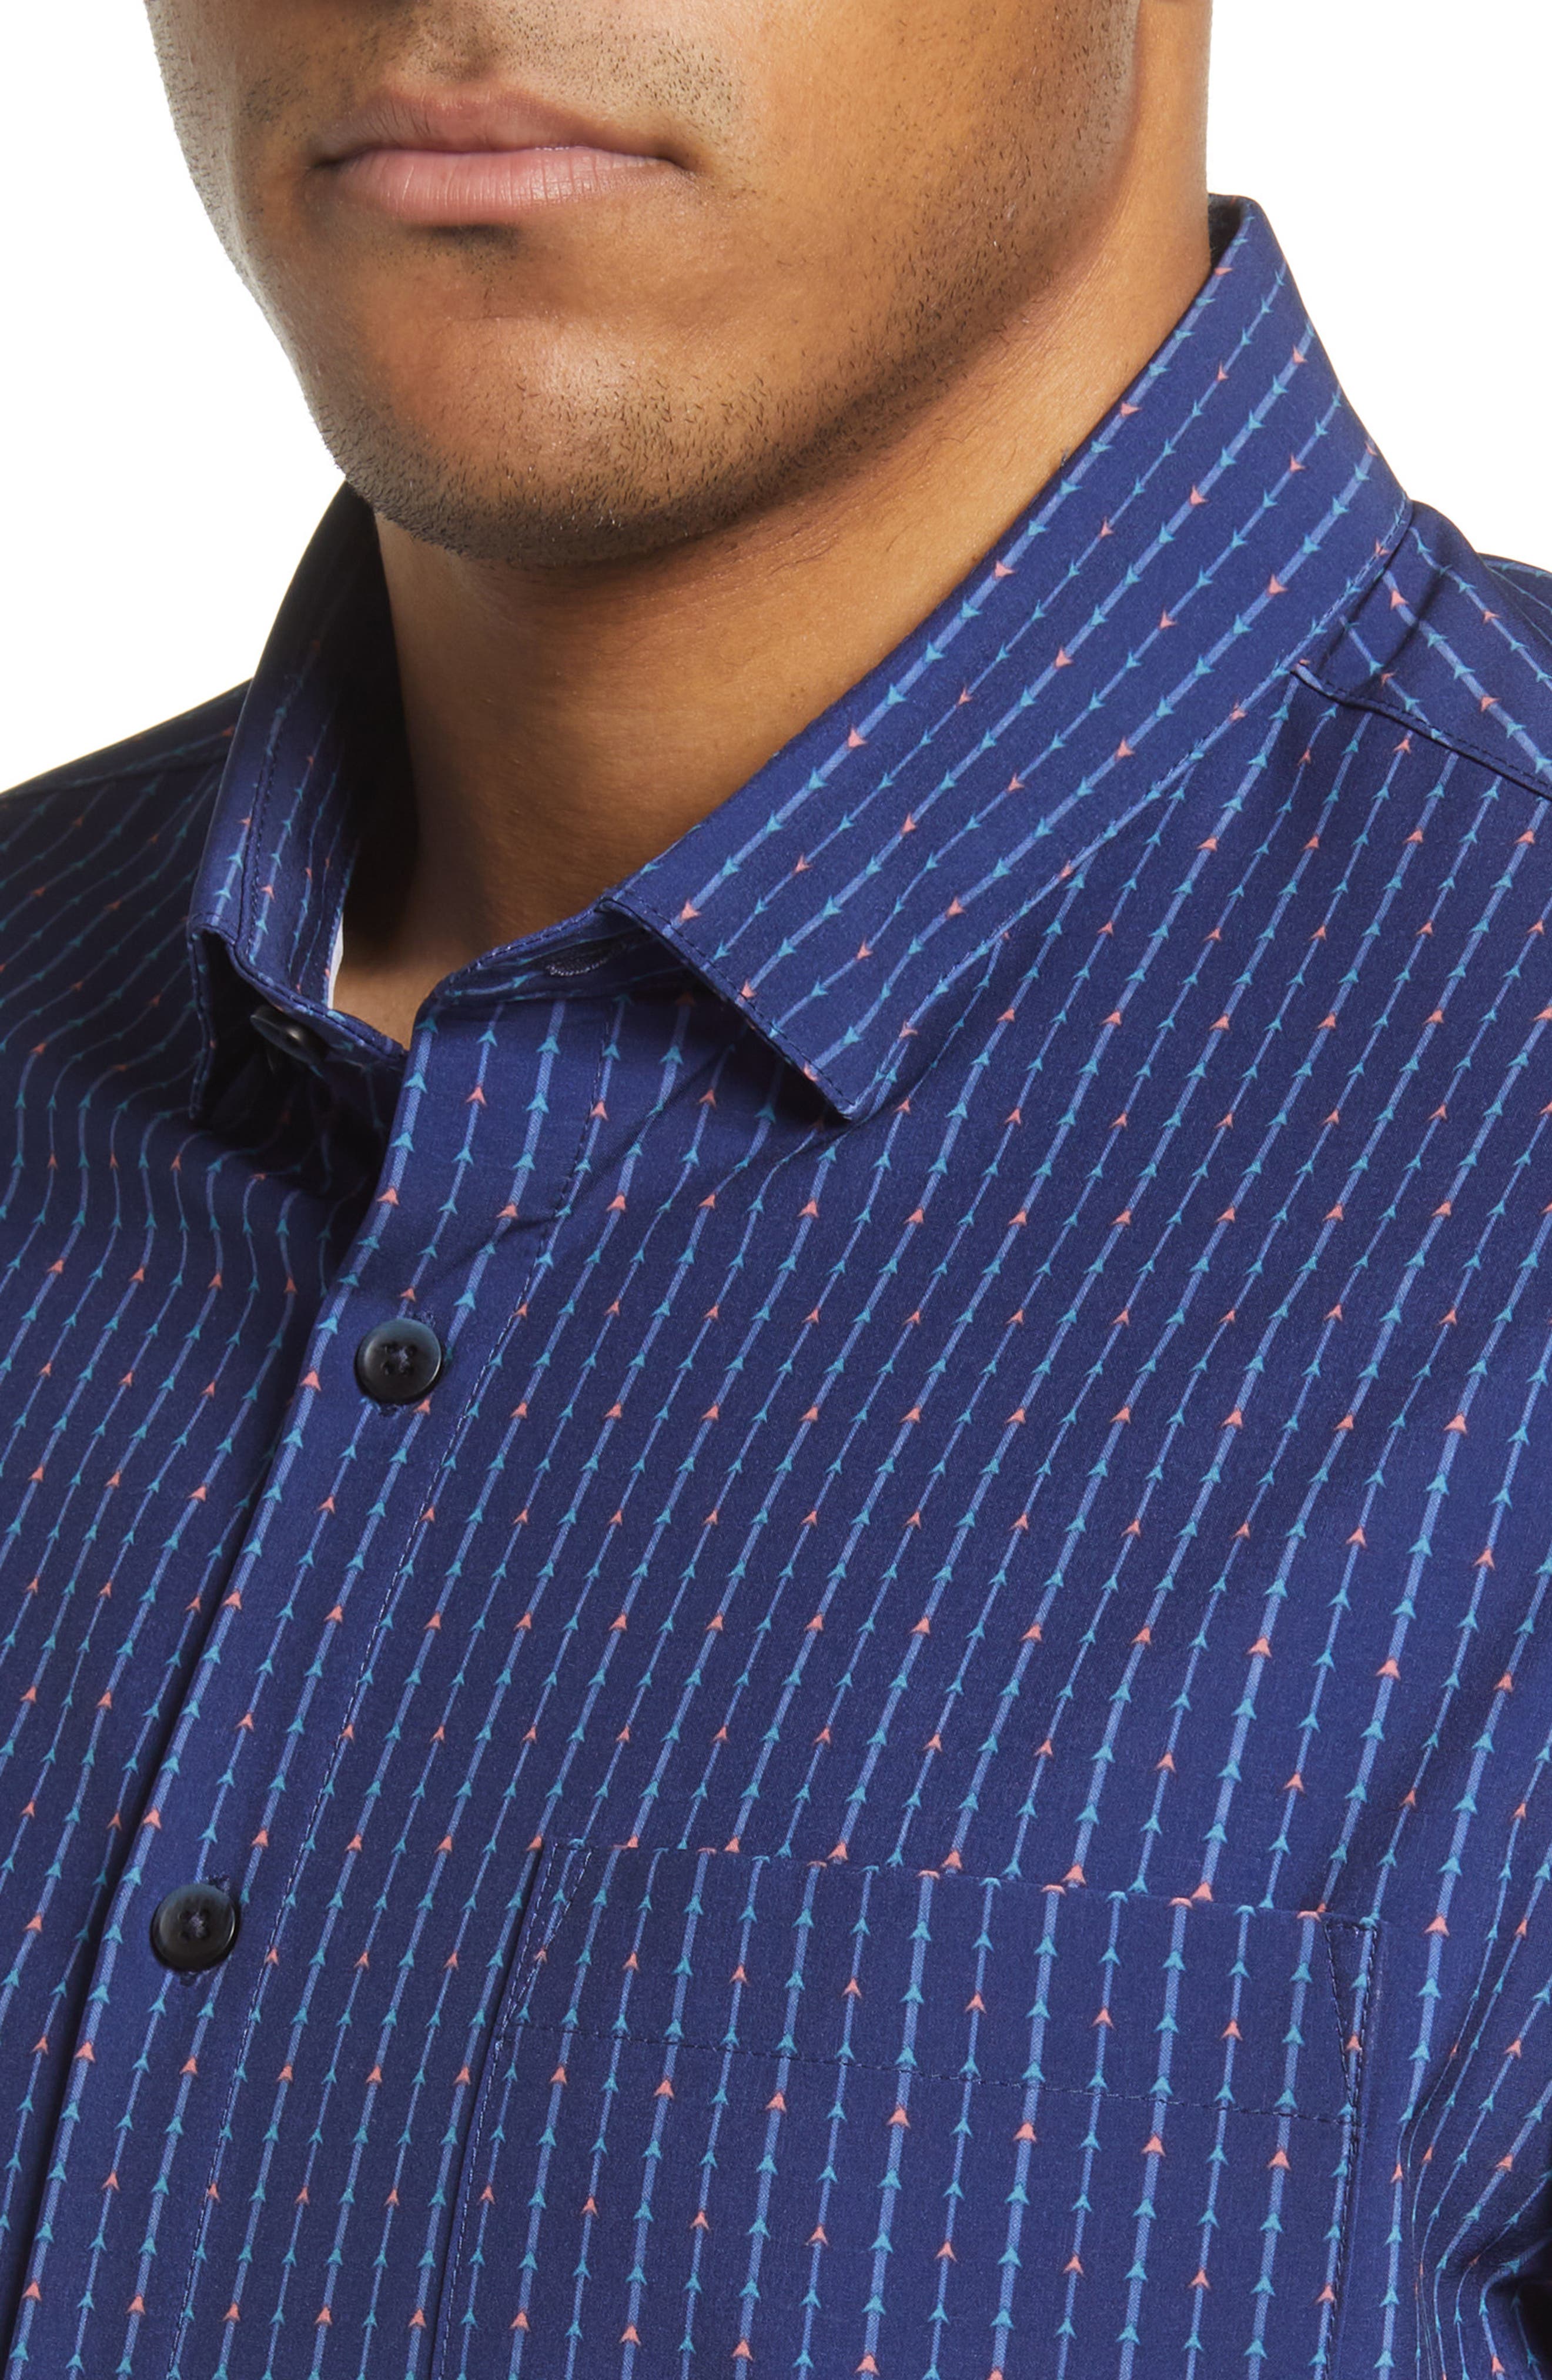 ONeill Mens Leeward Short-Sleeve Shirt Medium Light Blue